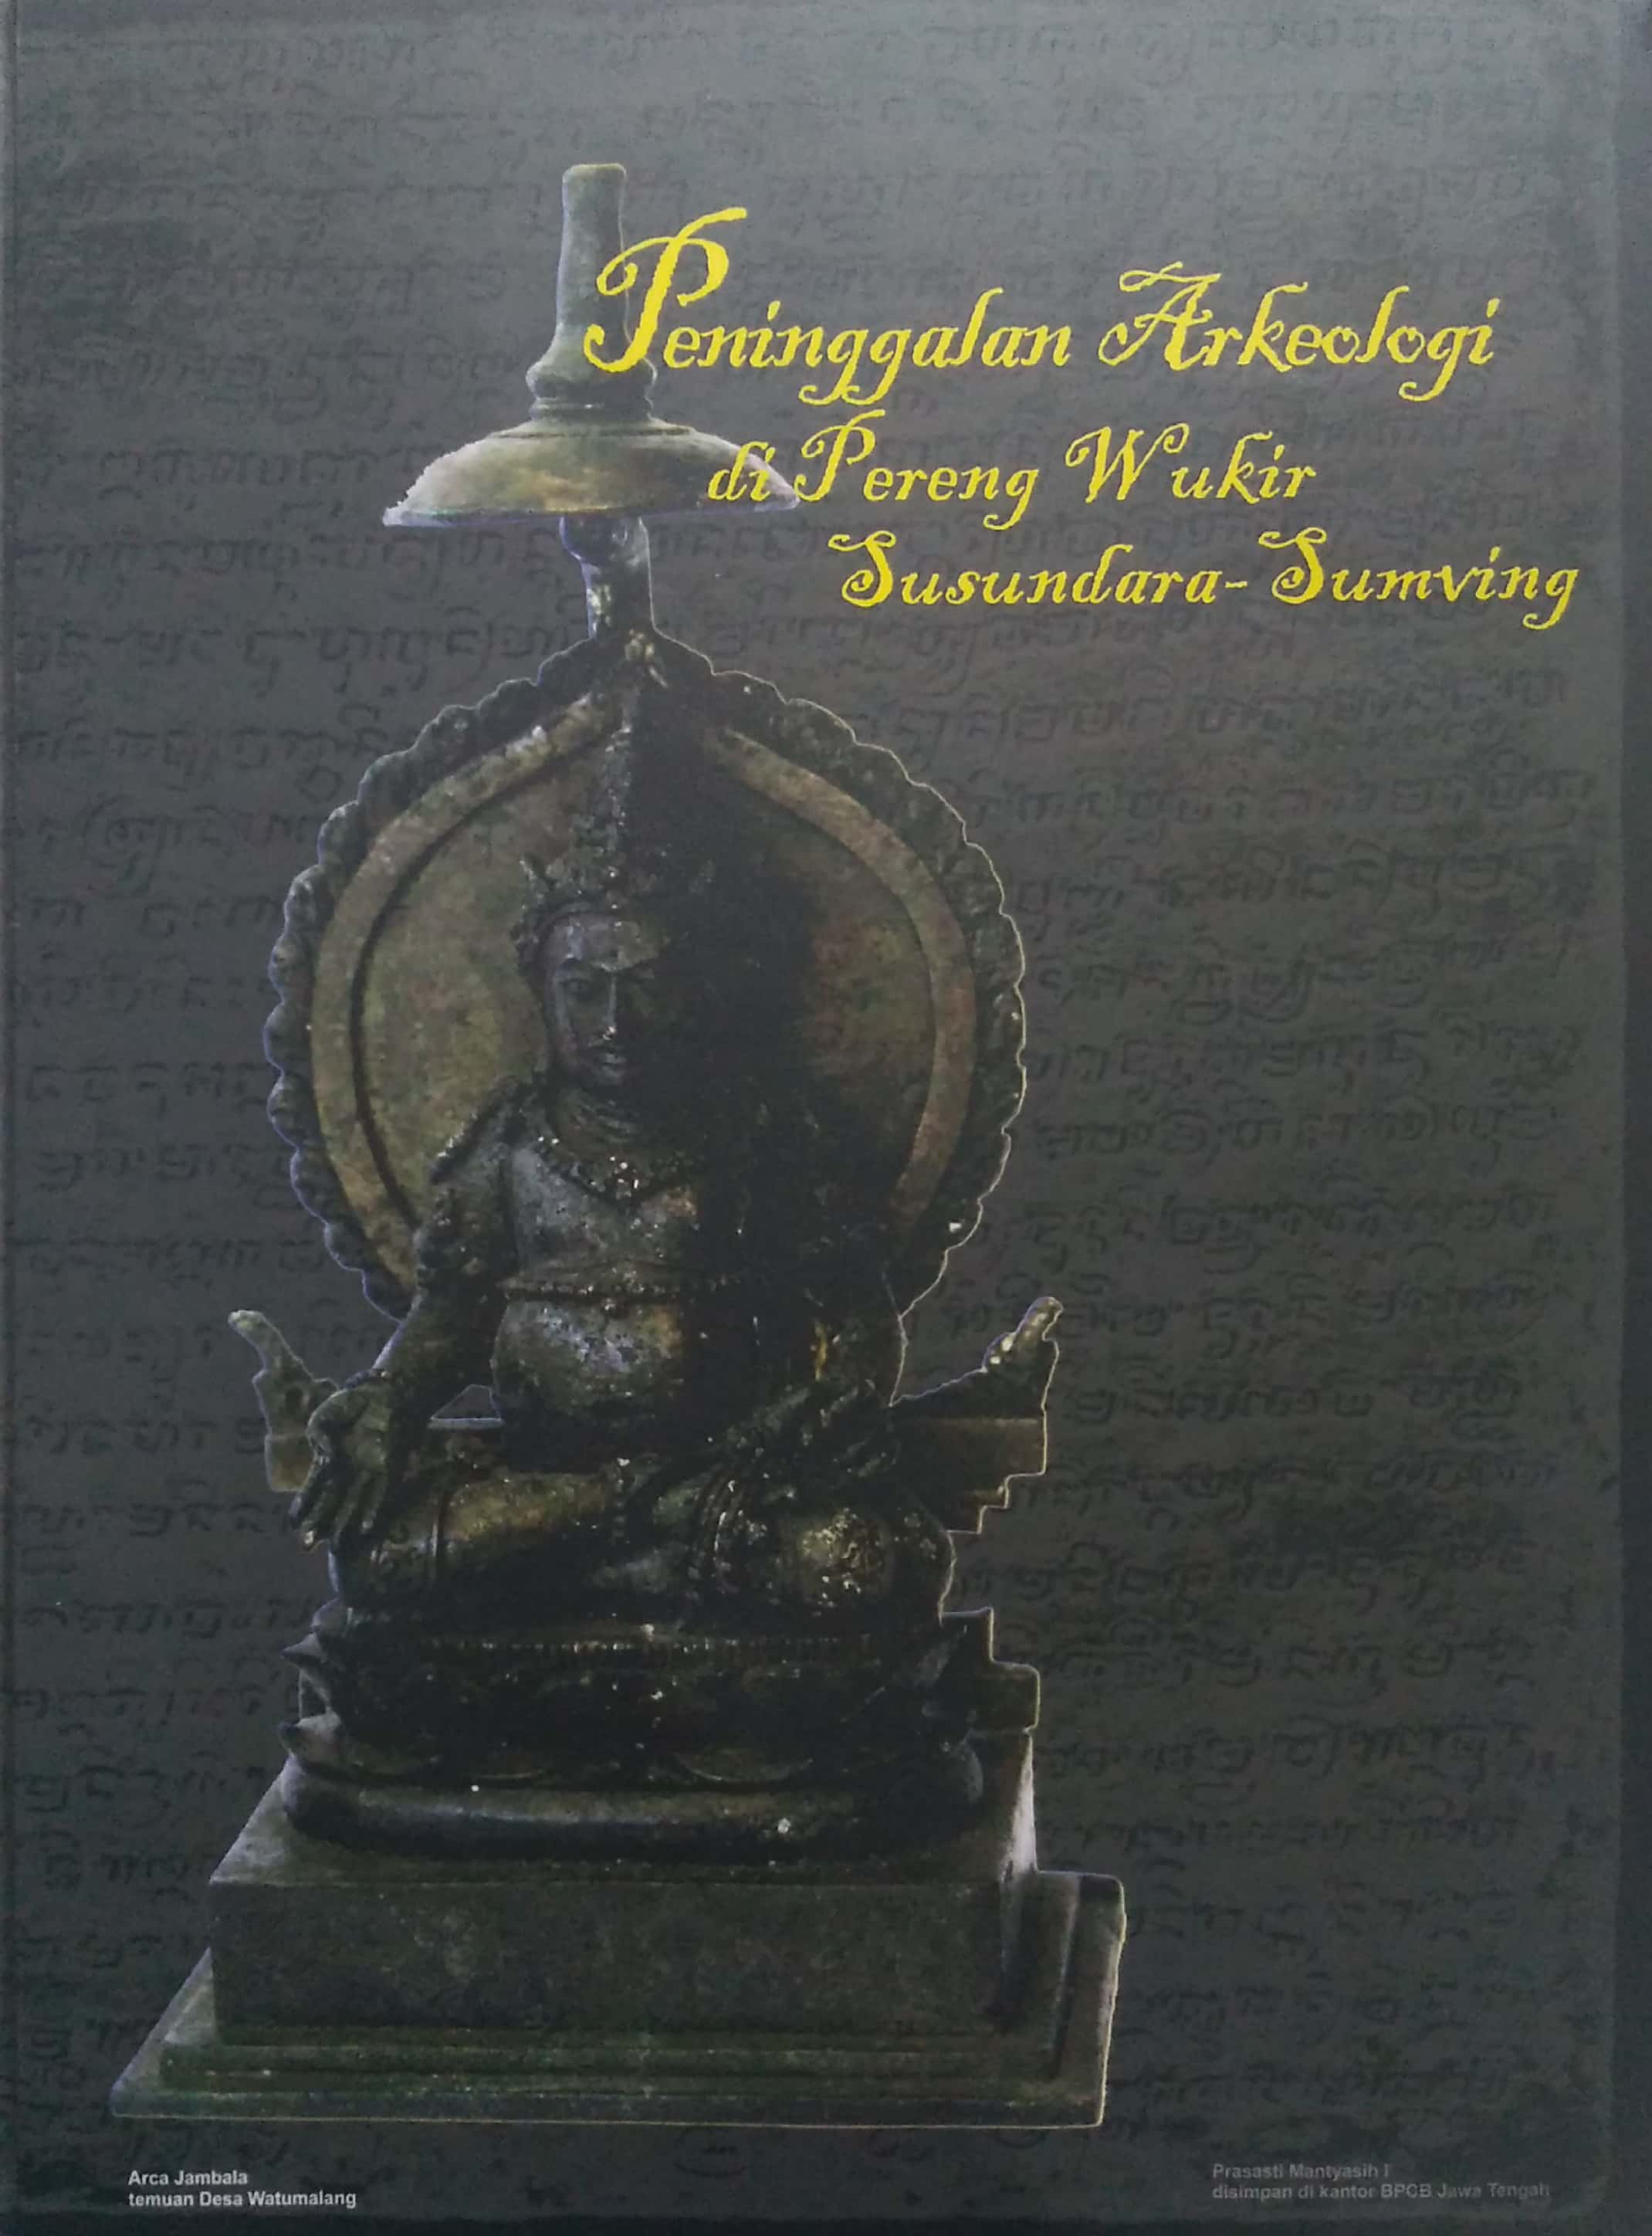 You are currently viewing BPCB Jateng Segera Terbitkan Buku Berjudul “Peninggalan Arkeologi di Pereng Wukir Susundara-Sumving”